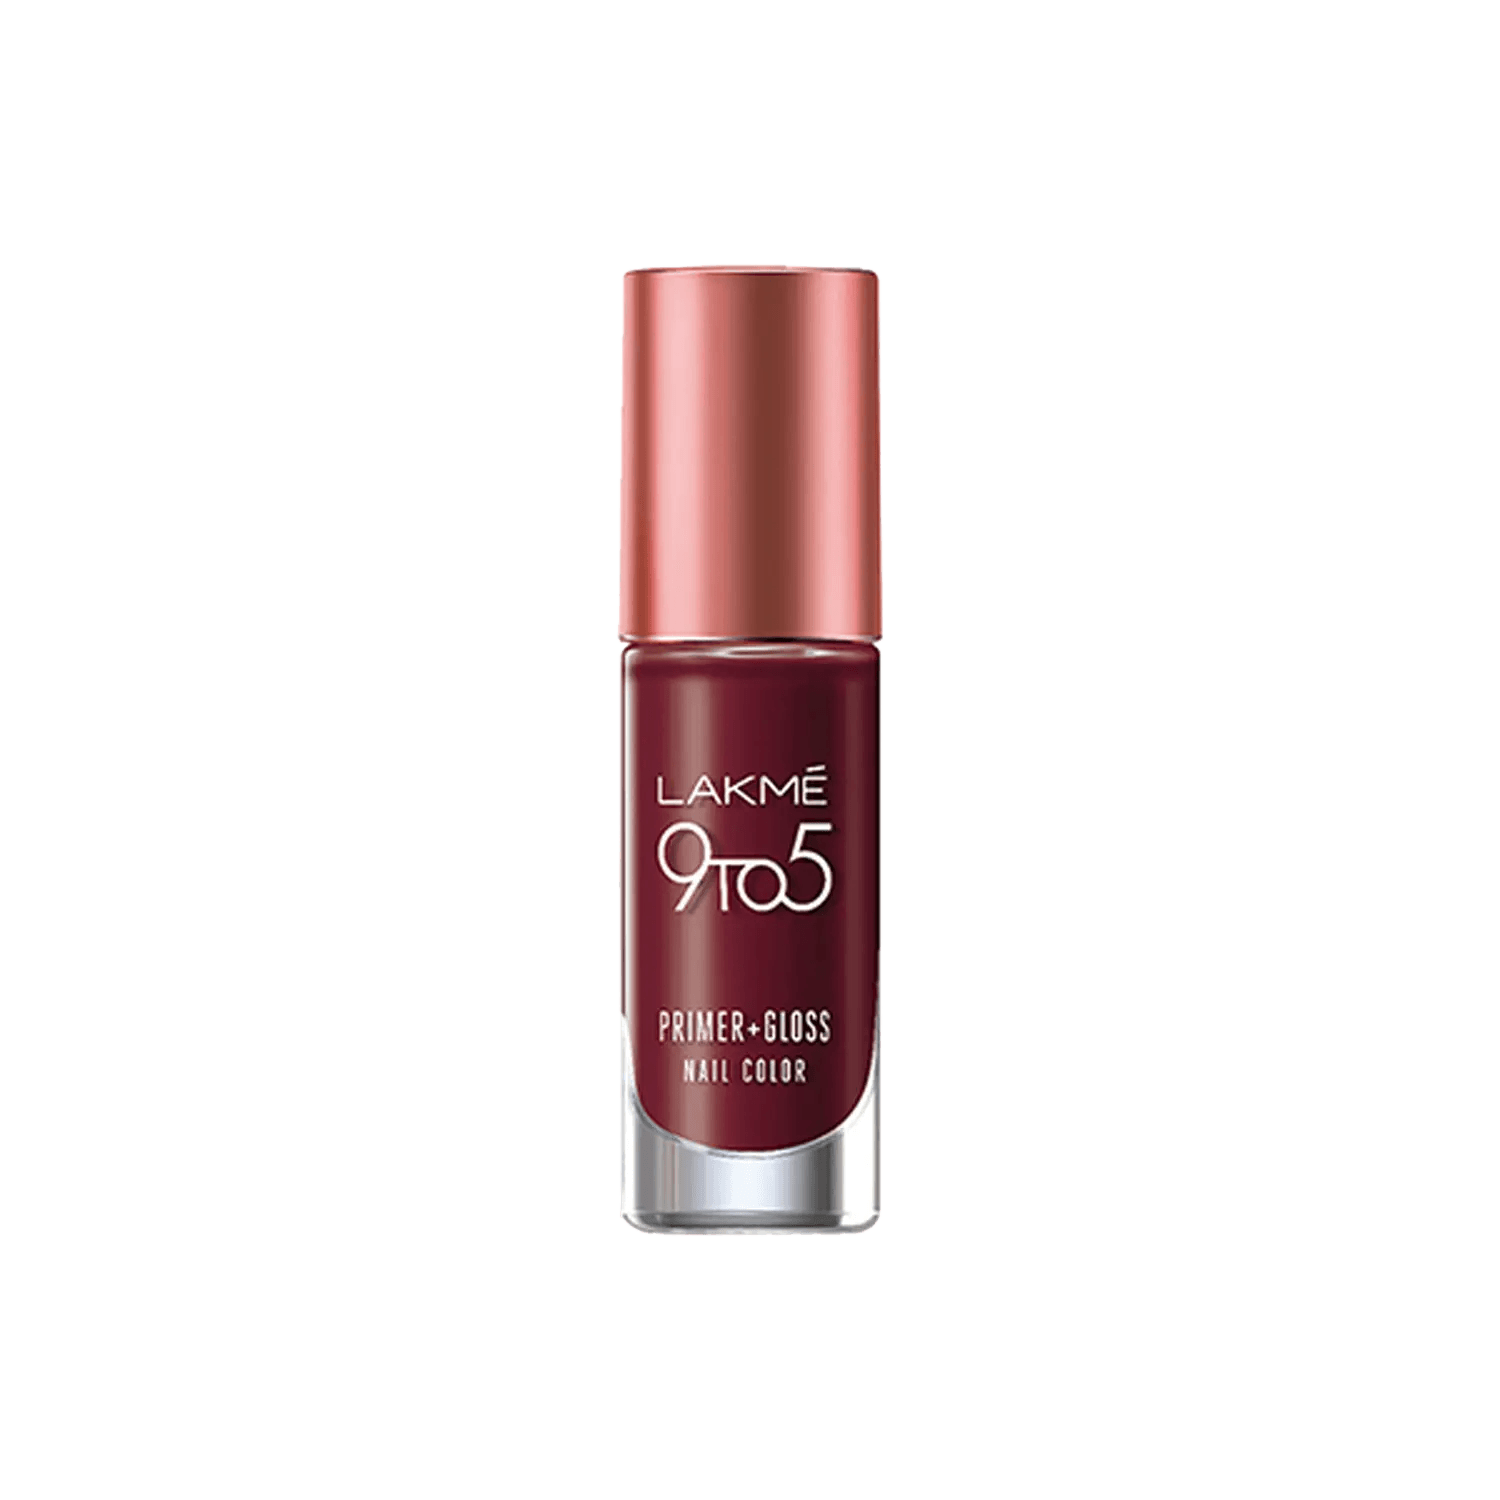 Lakme | Lakme 9To5 Primer + Gloss Nail Color - Mulberry Bush (6ml)